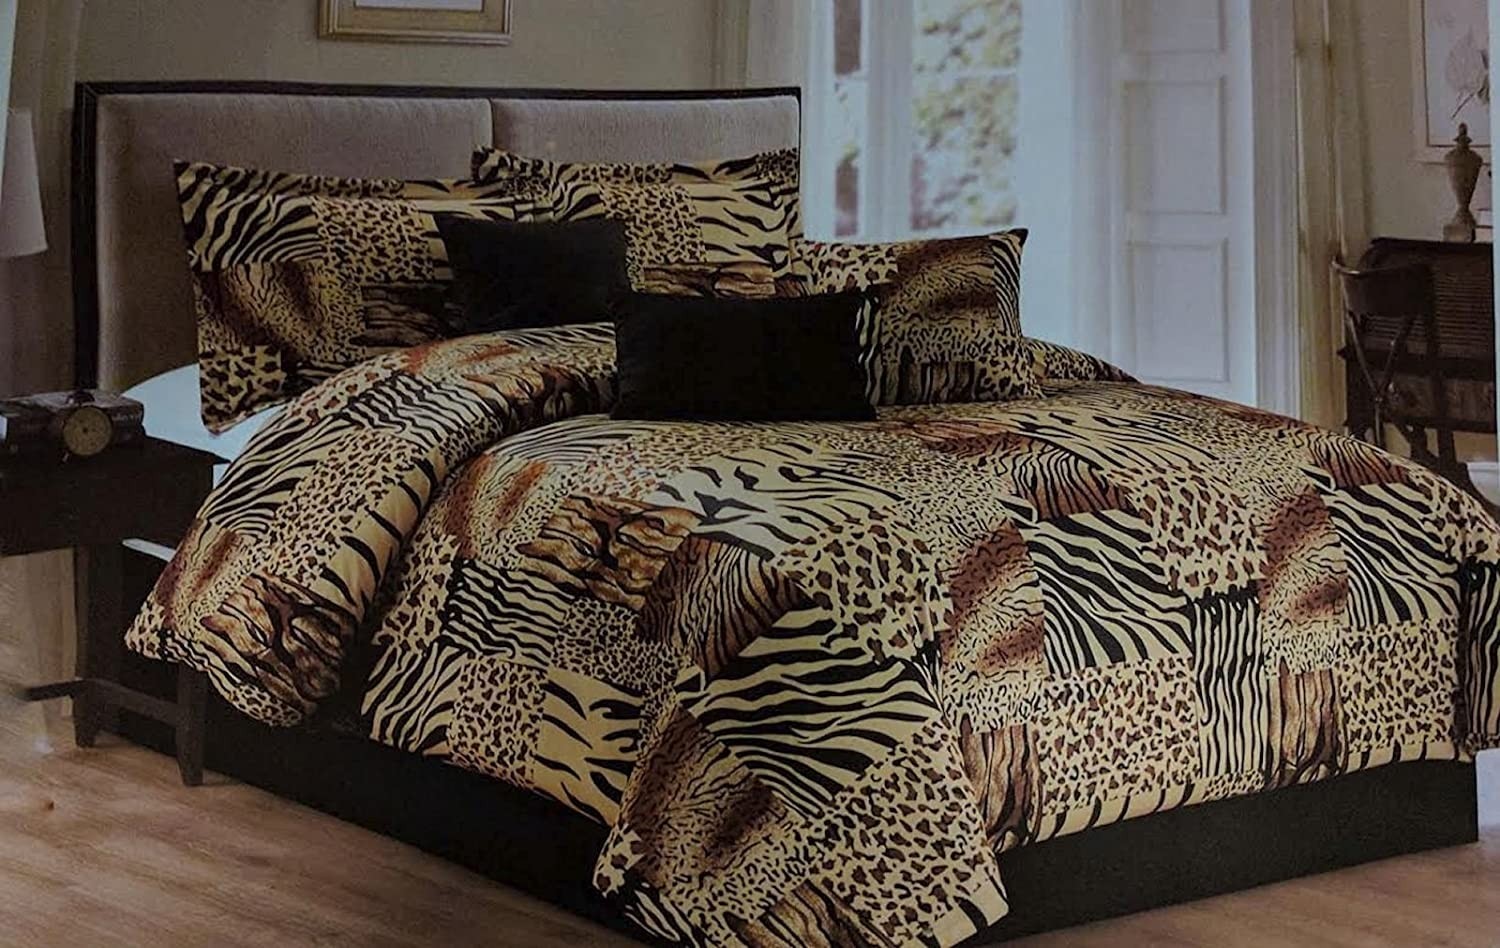 Animal print comforter sets queen twin bedding sets 2020